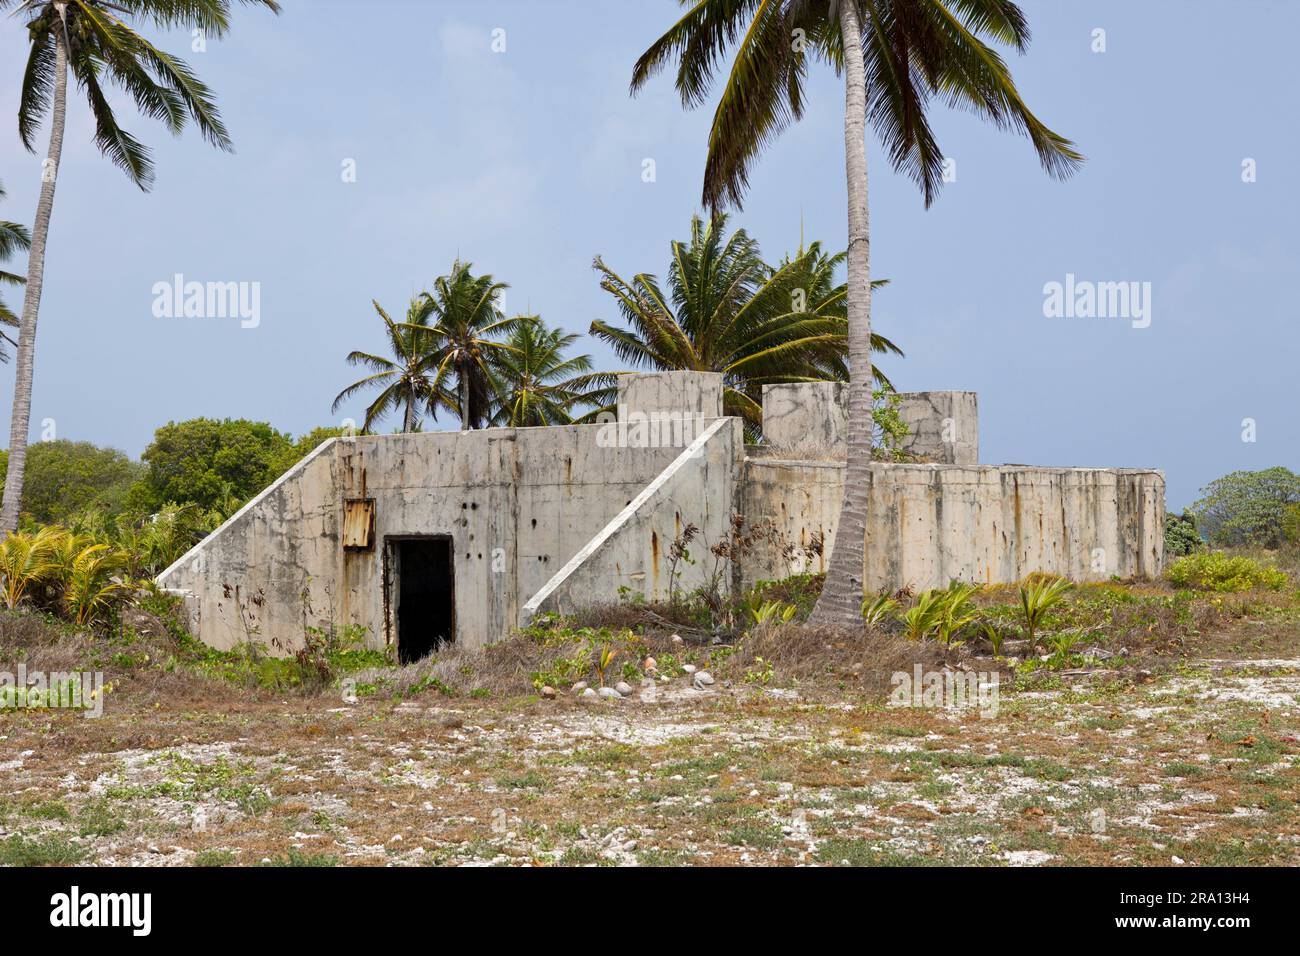 Bunkeranlagen für die Beobachtung des Atombombentests, Bikini-Insel, Bikini-Atoll, Marshallinseln, Mikronesien Stockfoto